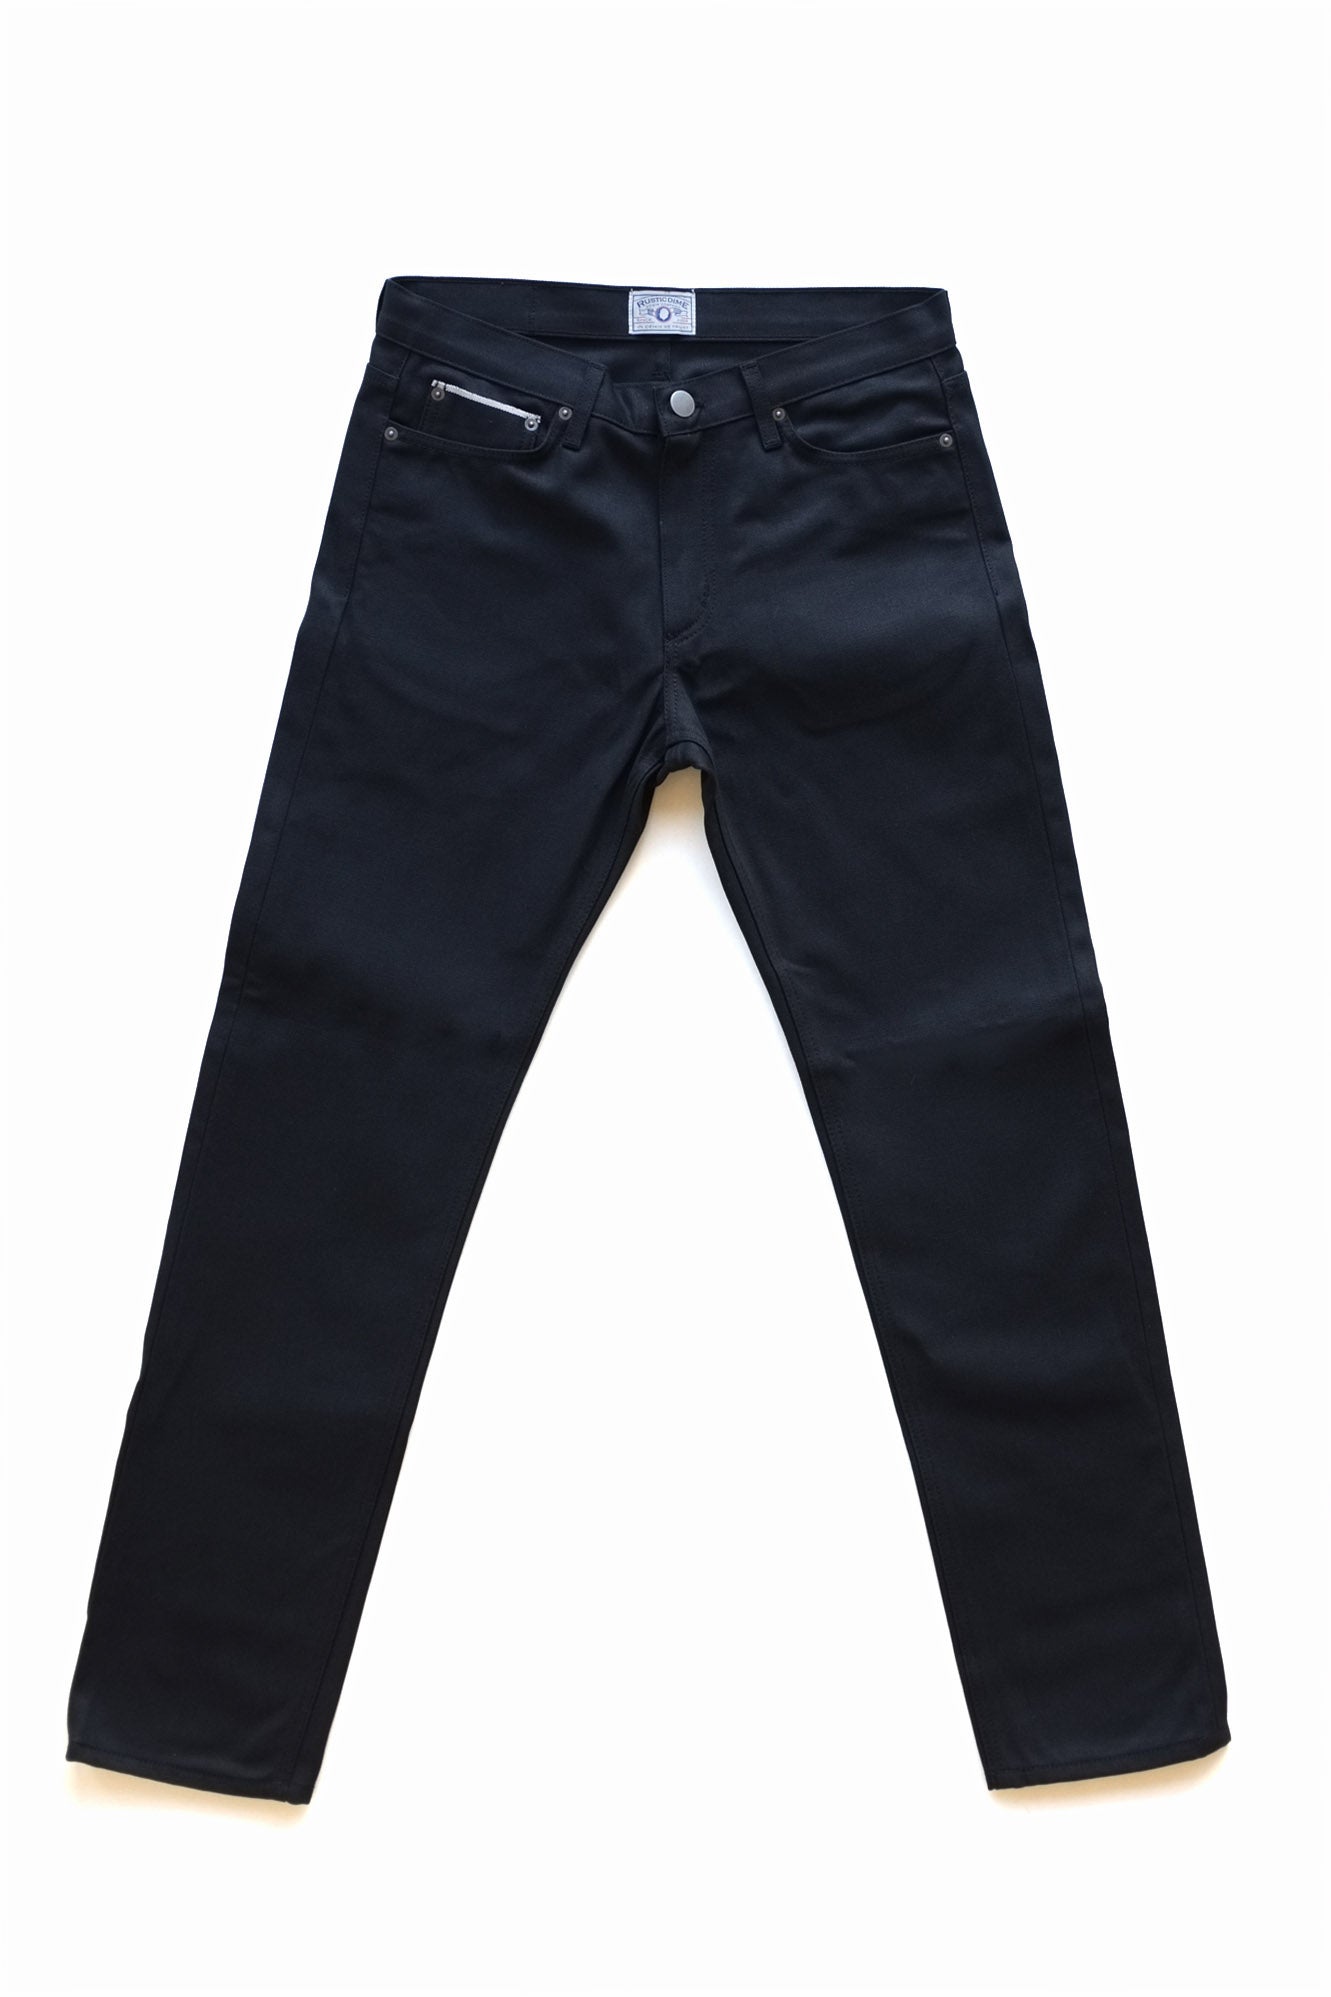 Shop Men Black Cotton Slim Fit Narrow Jeans - Spykar